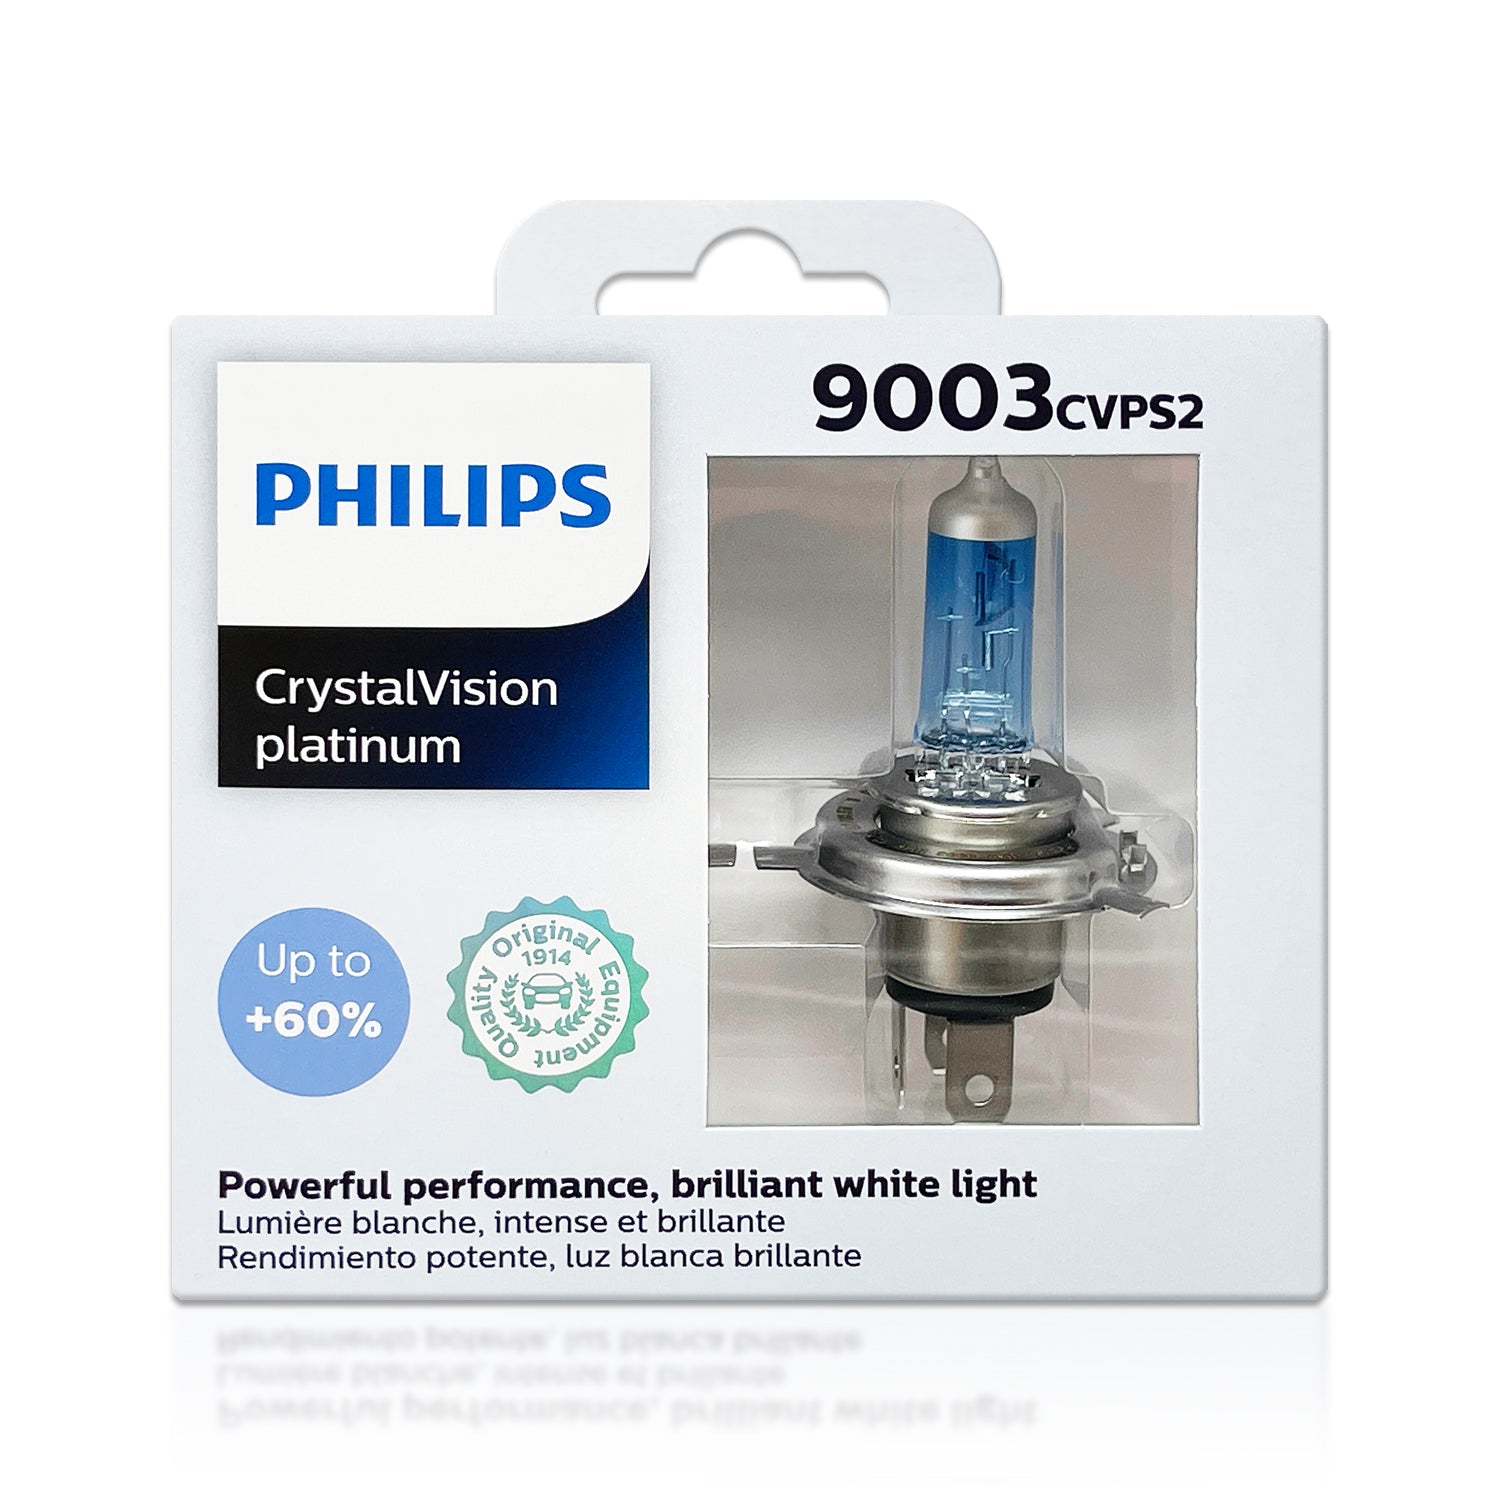 Philips CrystalVision Platinum 9003CVPS2